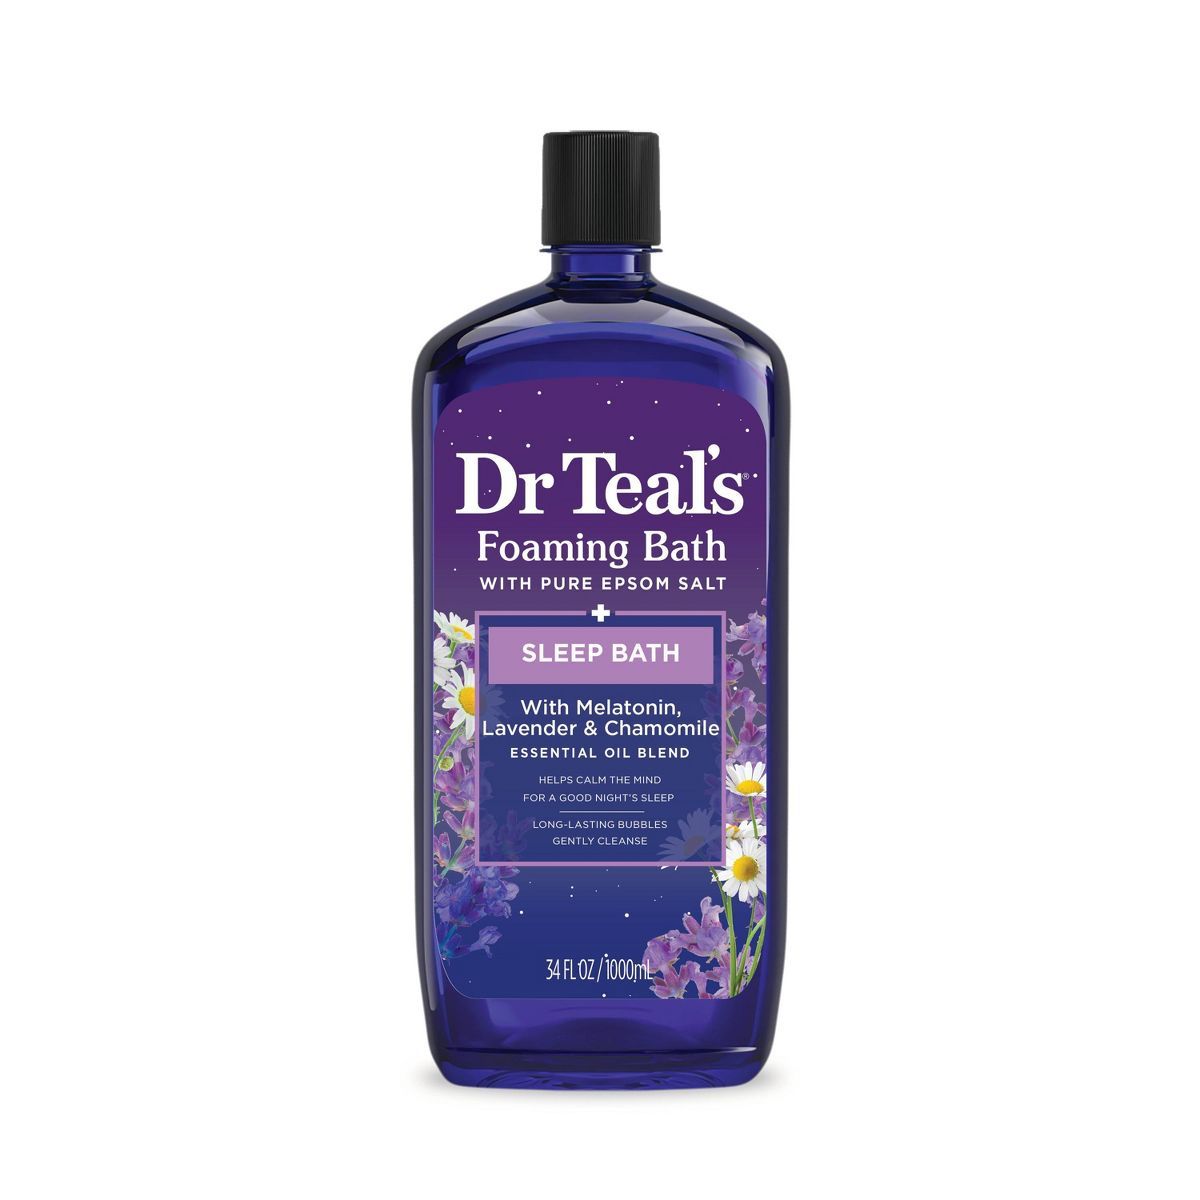 Dr Teal's Sleep Foaming Bath with Melatonin & Essential Oils - 34 fl oz | Target